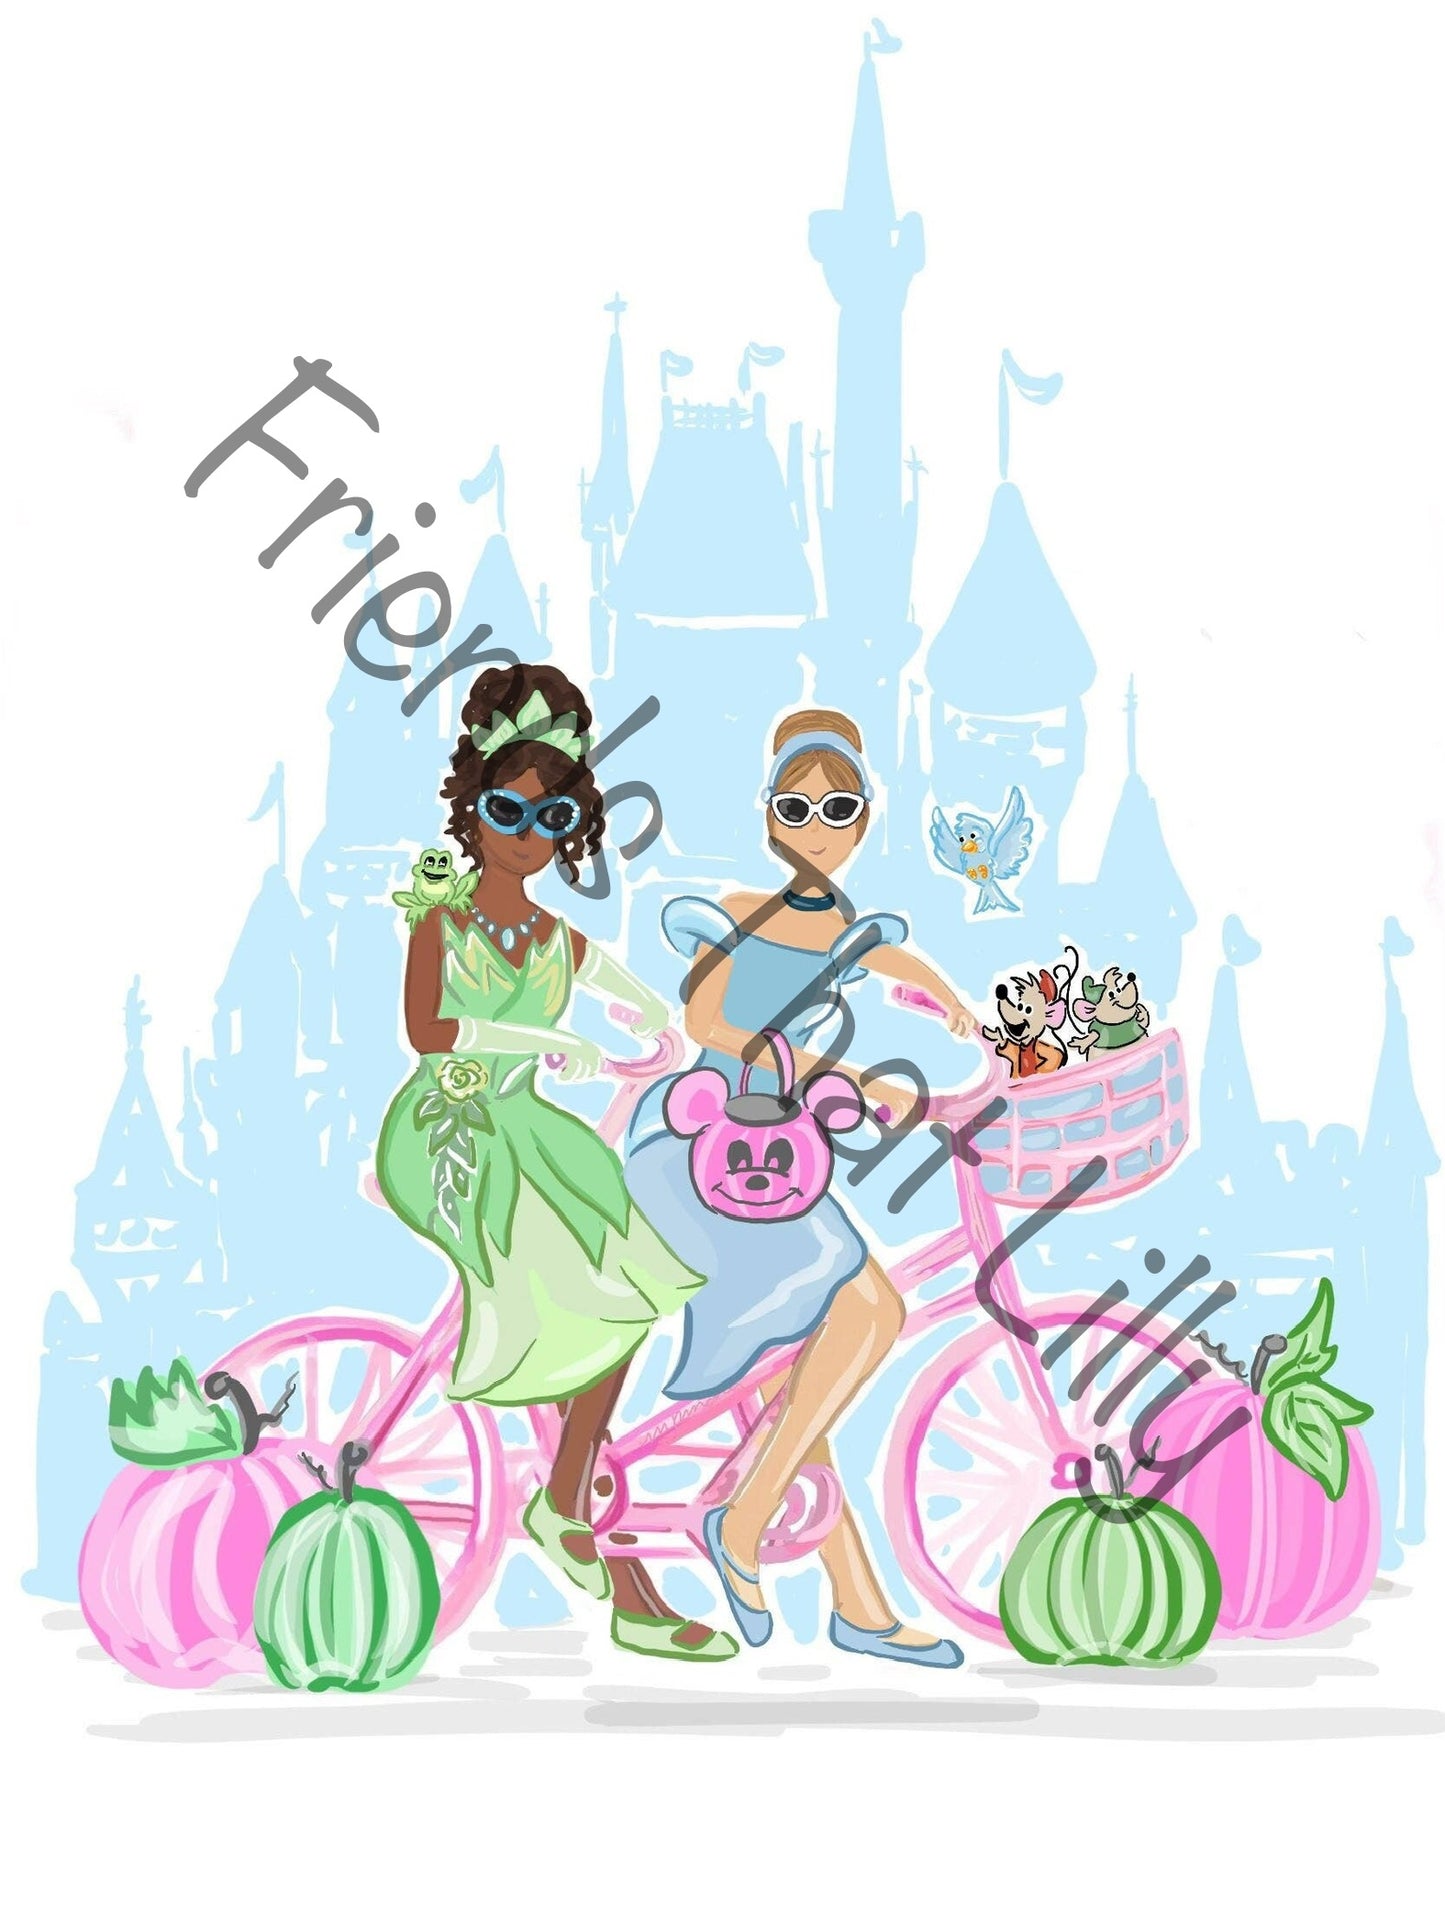 SALE! FTL Green and Blue Princess w/ Pumpkins Illustration Shirts